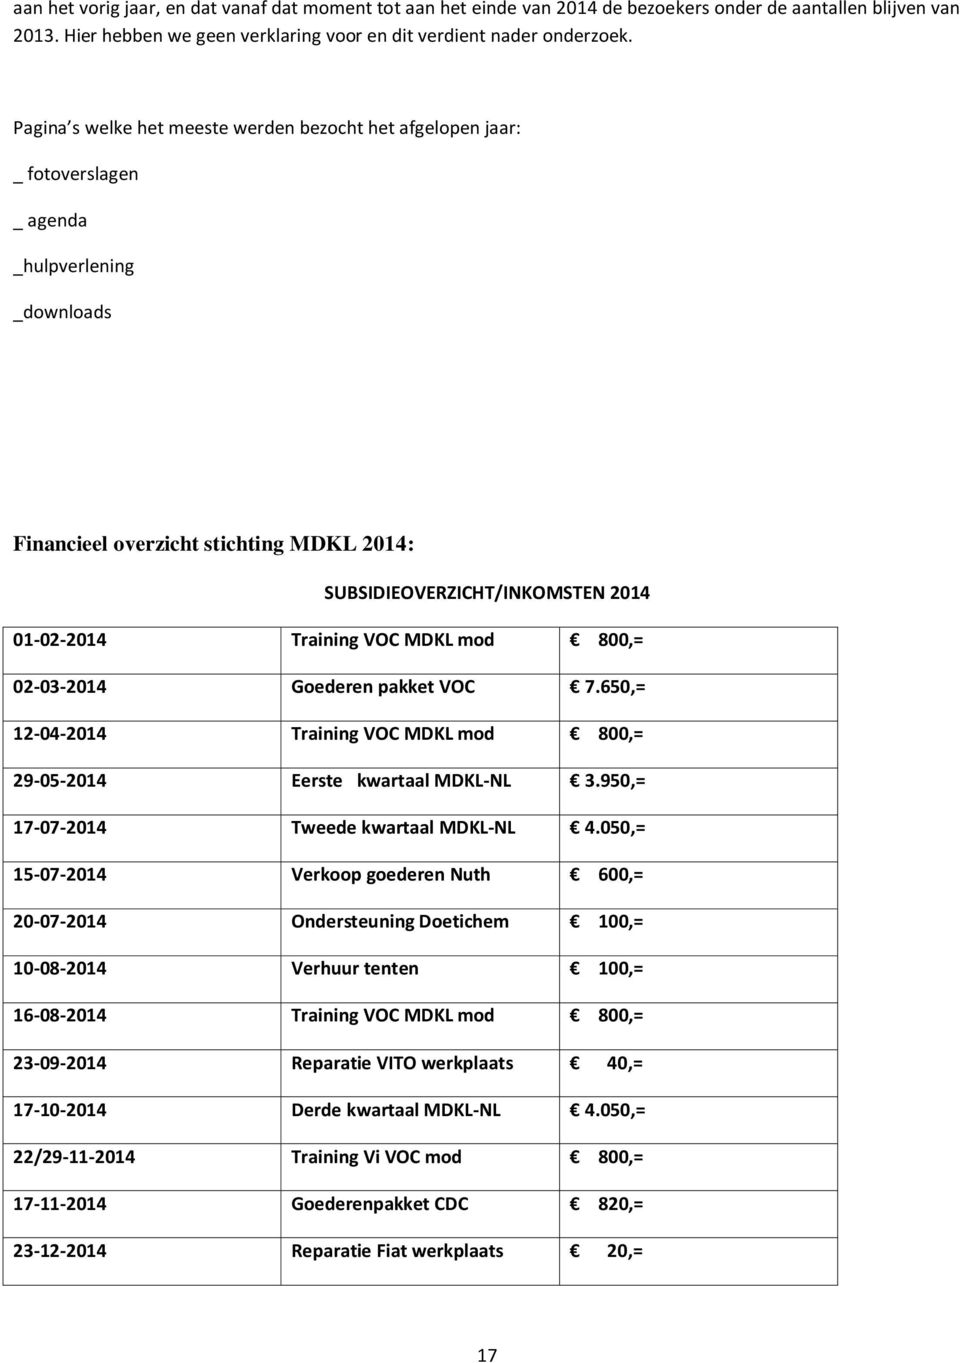 Training VOC MDKL mod 800,= 02-03-2014 Goederen pakket VOC 7.650,= 12-04-2014 Training VOC MDKL mod 800,= 29-05-2014 Eerste kwartaal MDKL-NL 3.950,= 17-07-2014 Tweede kwartaal MDKL-NL 4.